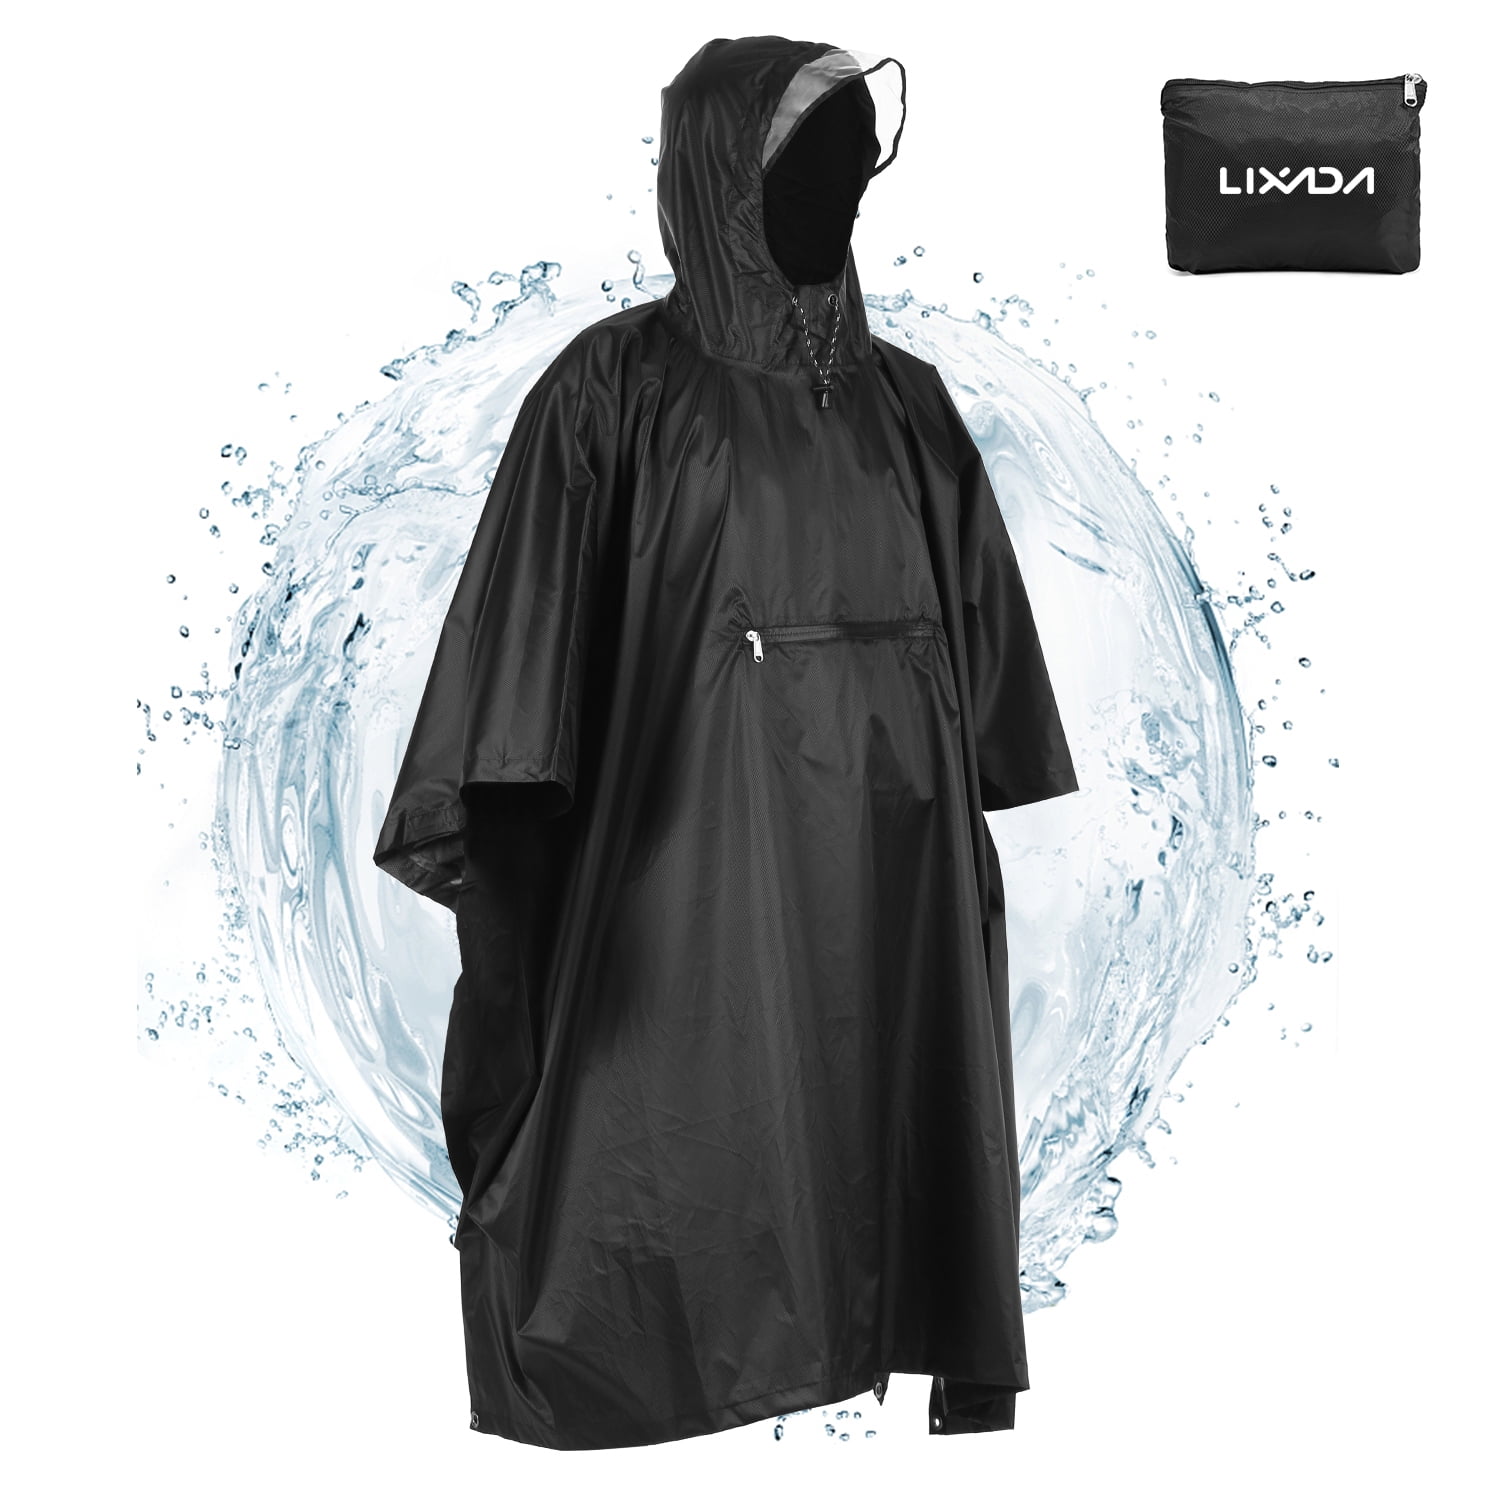 Lixada Hooded Rain Poncho Waterproof Raincoat Jacket Cycling Rain Cover for  Outdoor Camping Hiking Fishing 